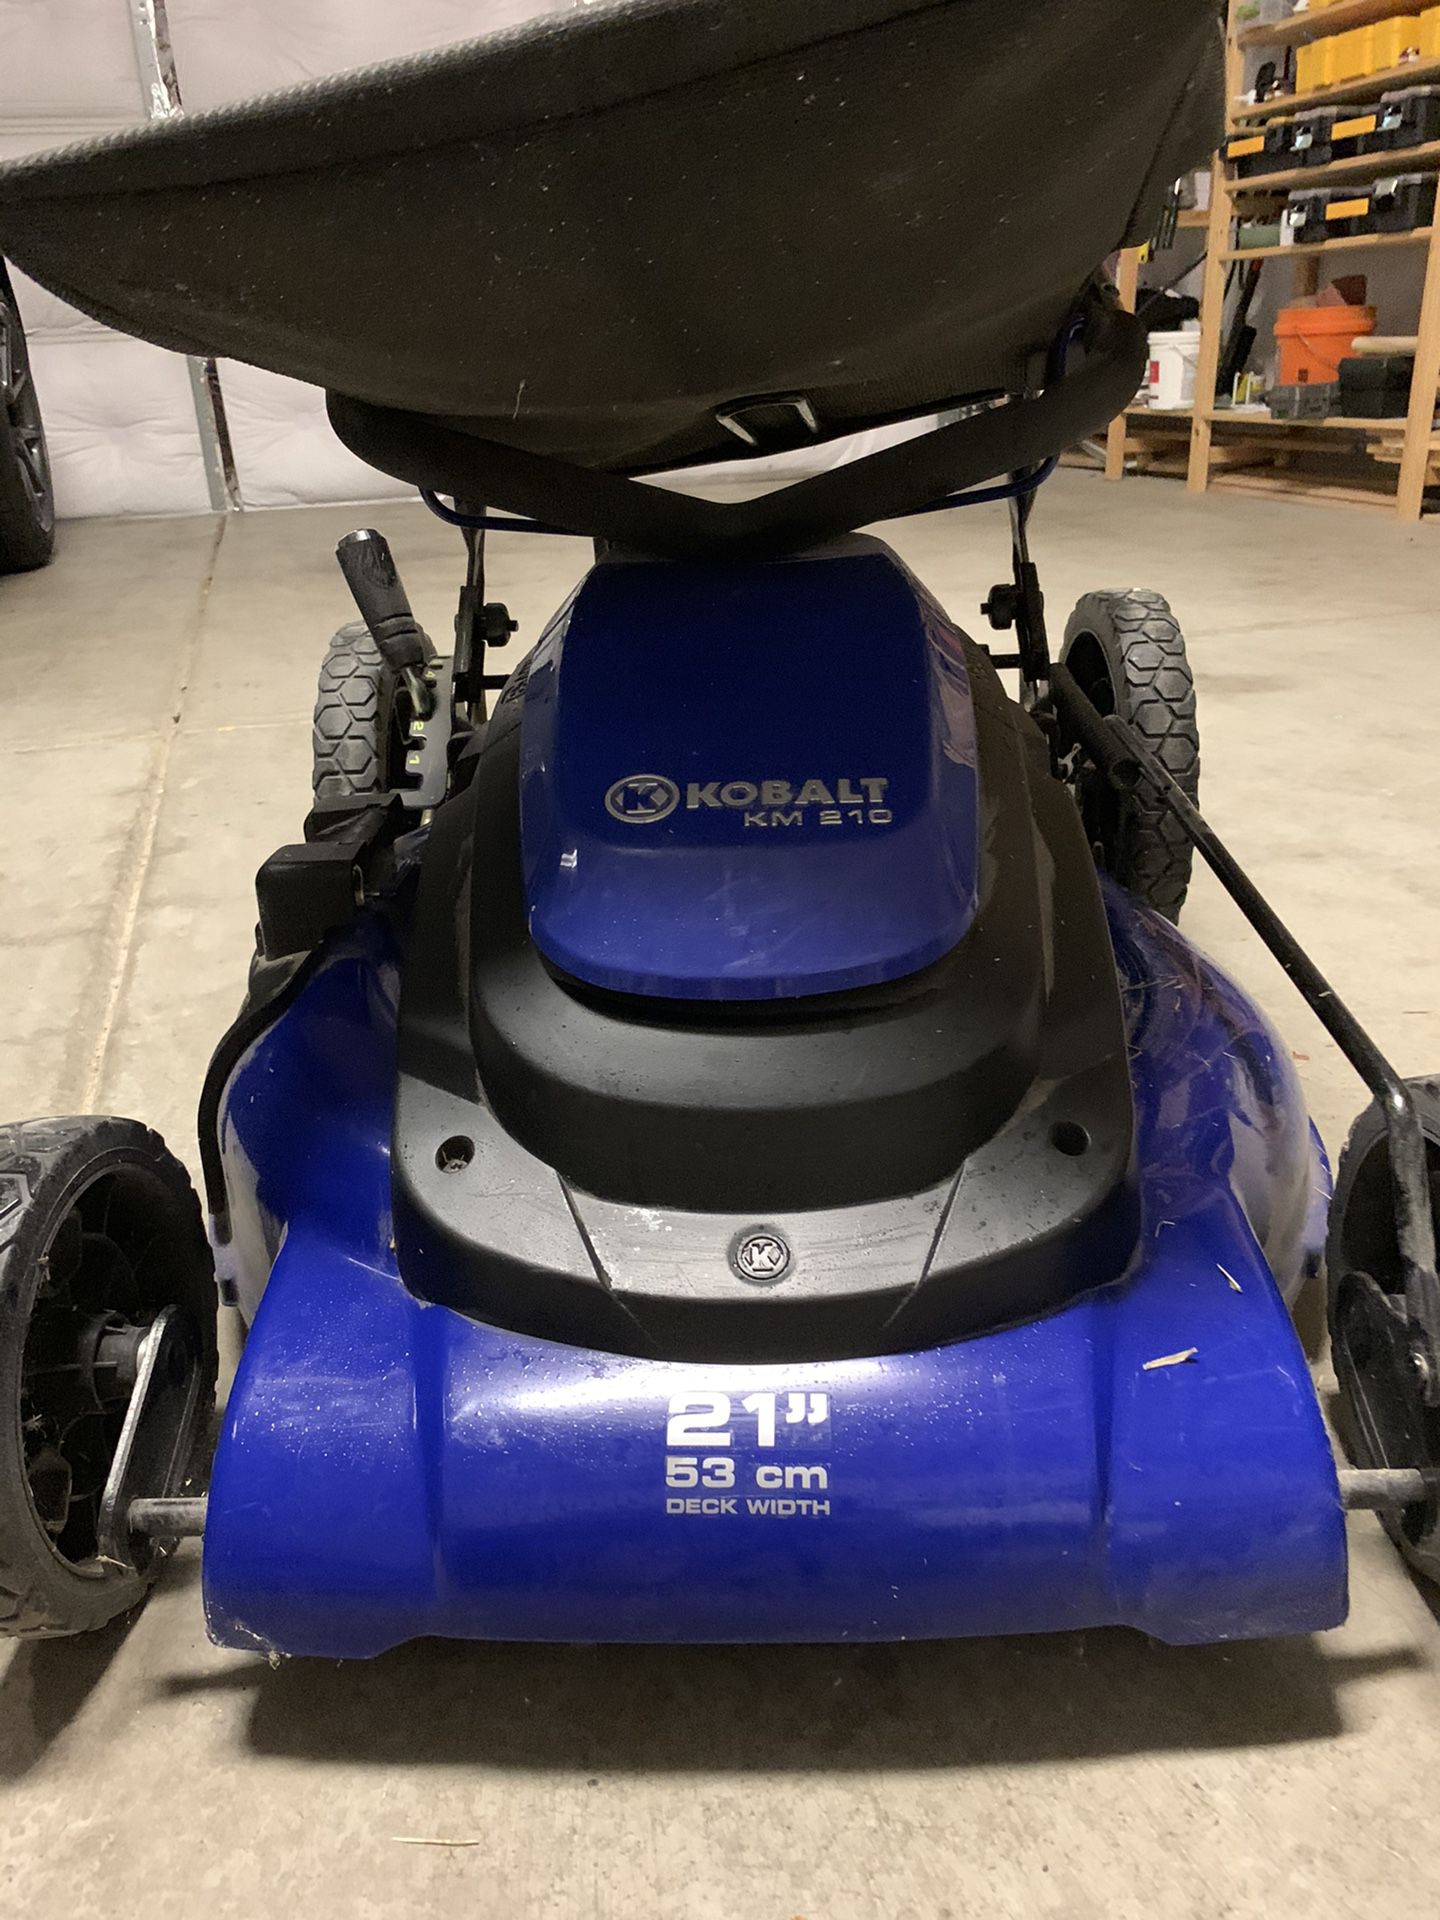 Kobalt 210 electric lawnmower